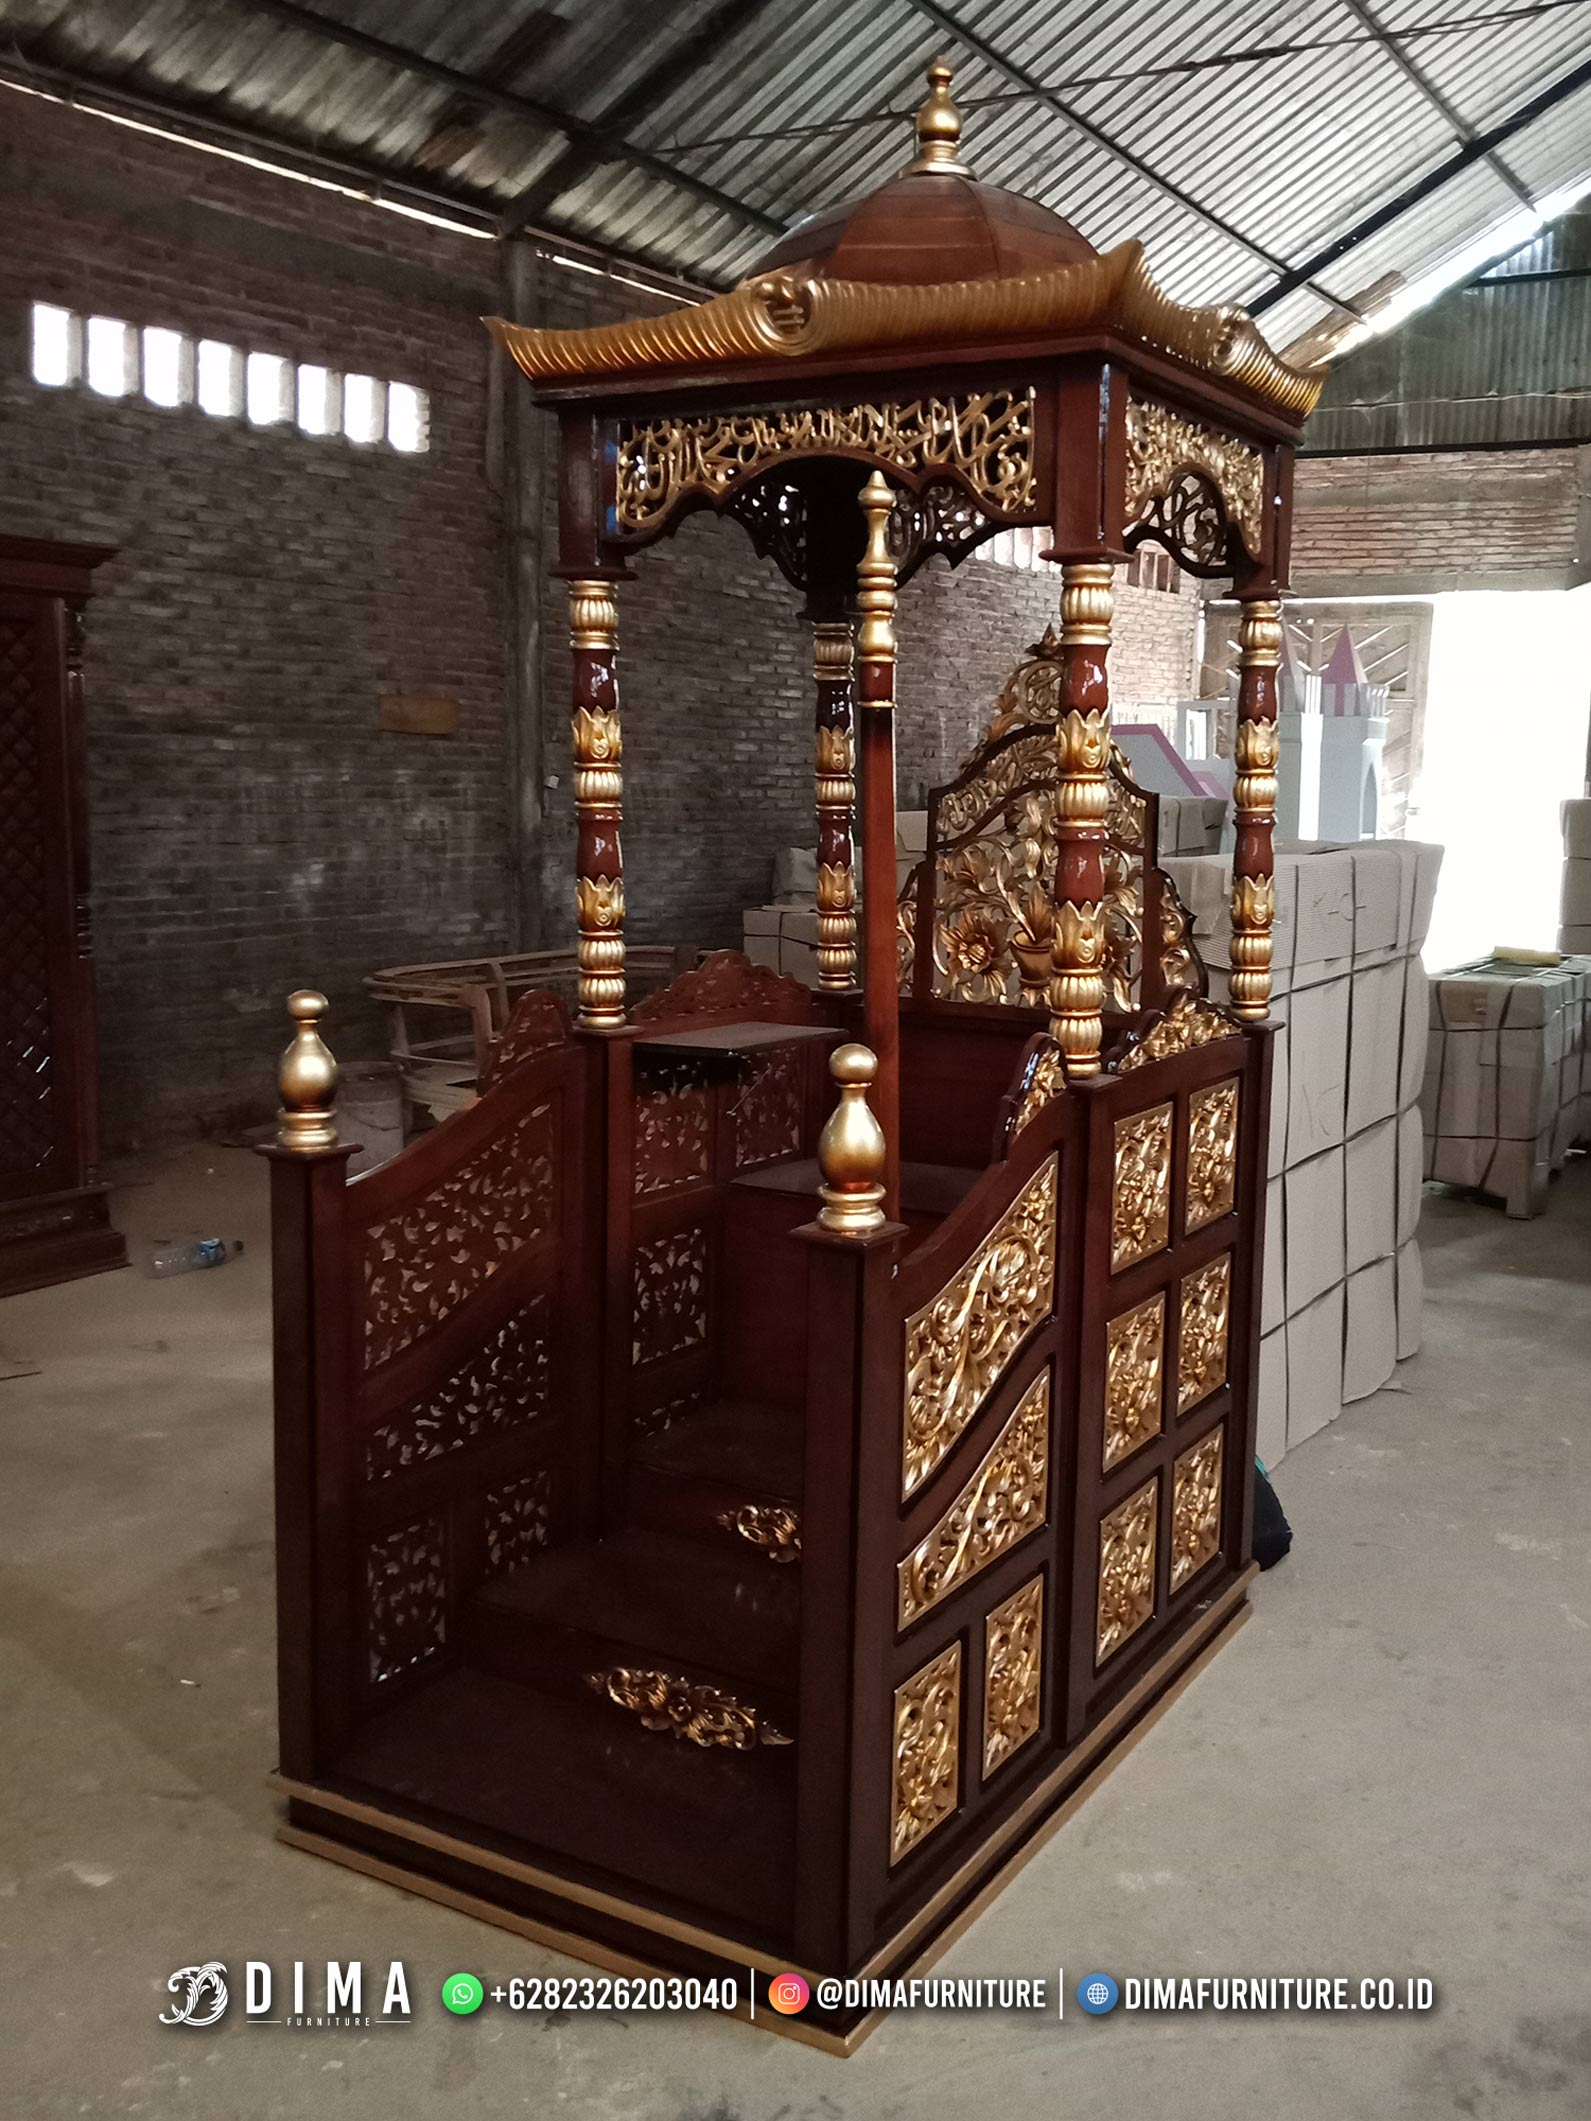 New Mimbar Masjid Jati Kubah Ukiran Great Carving Furniture Mm-1499